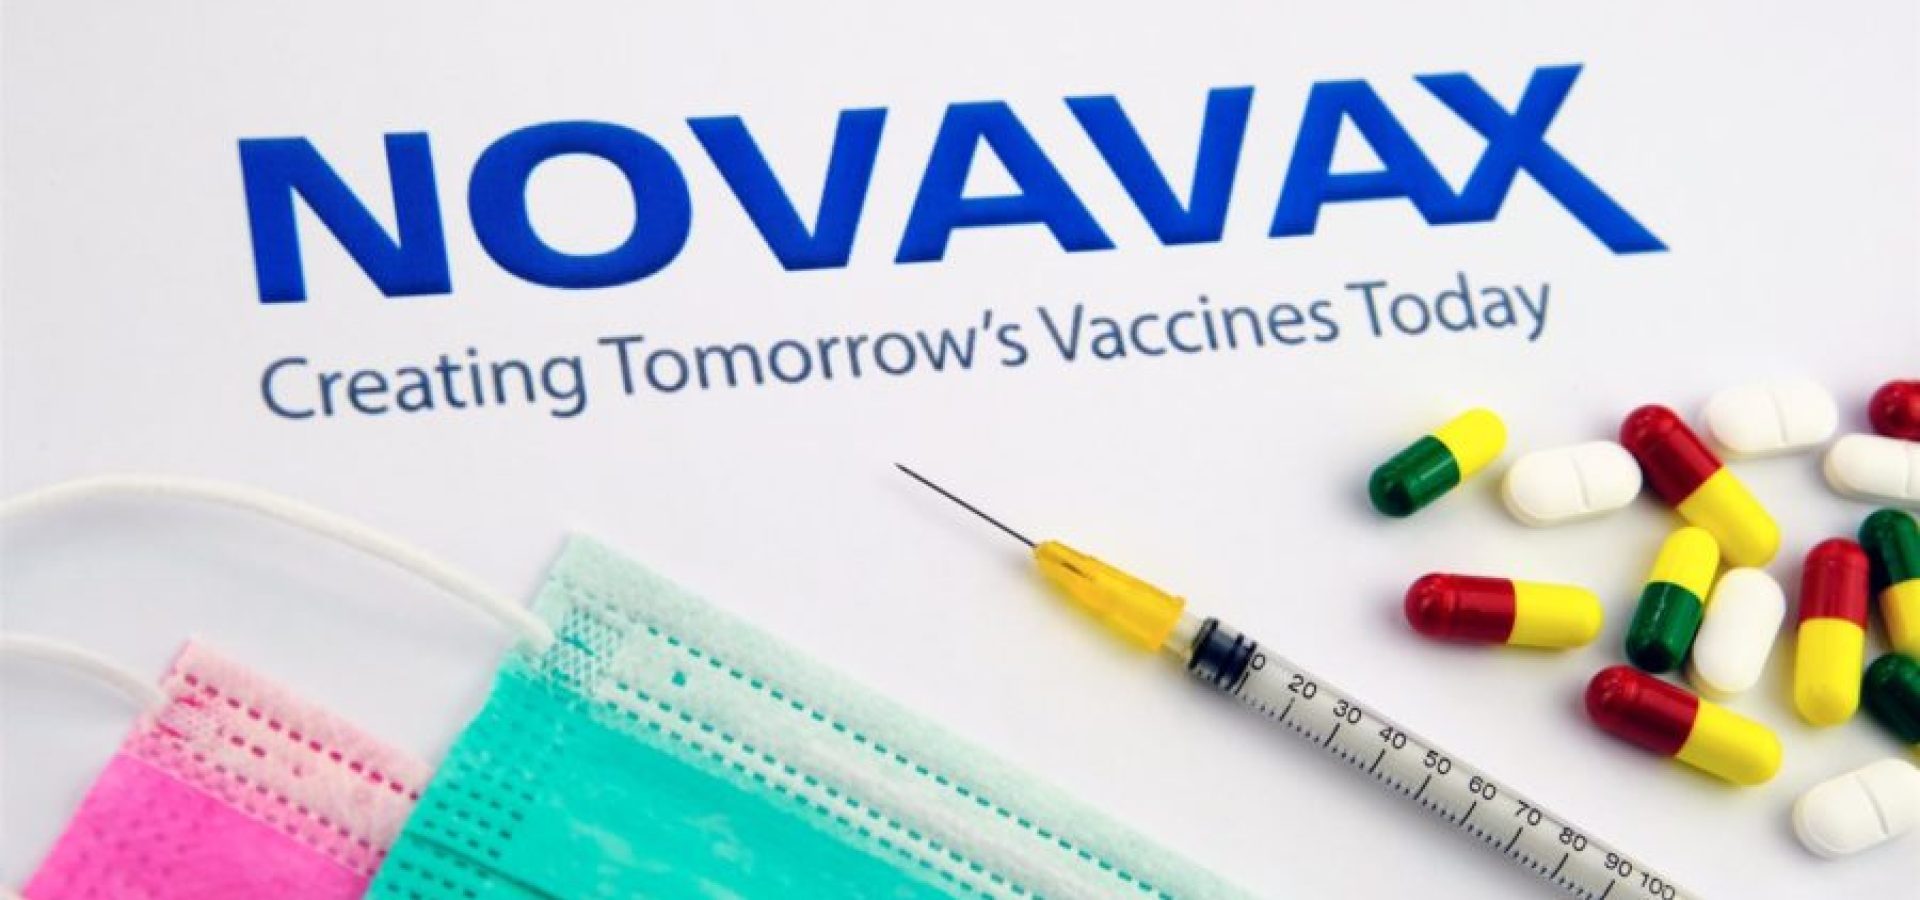 Novavax and vaccine, Covid-19 pandemics